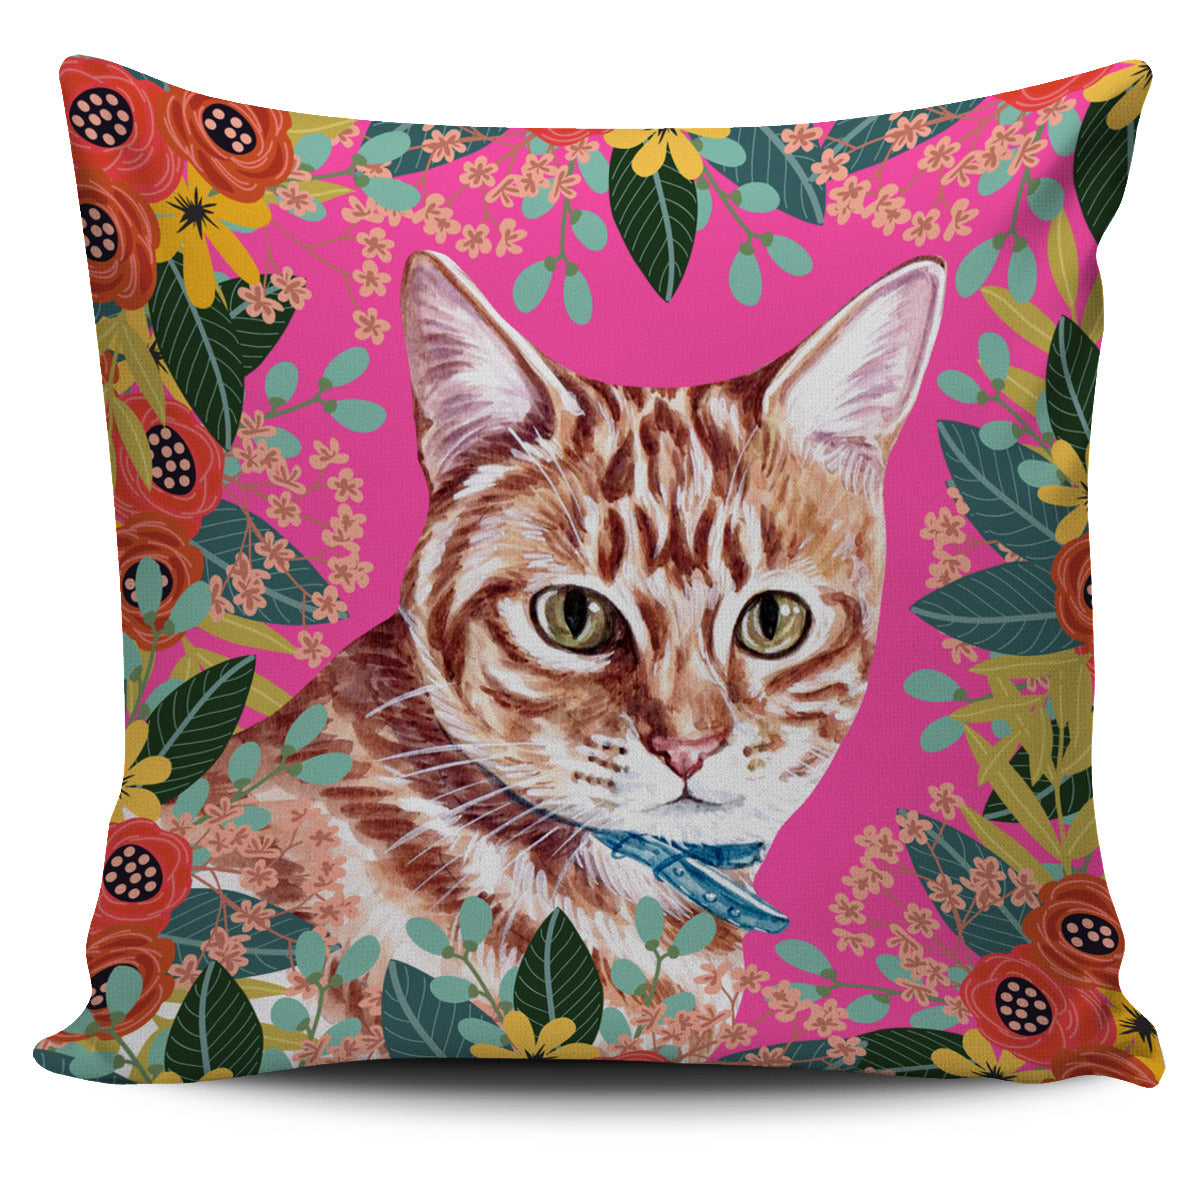 Joyful Tabby Cat Pillow Cover